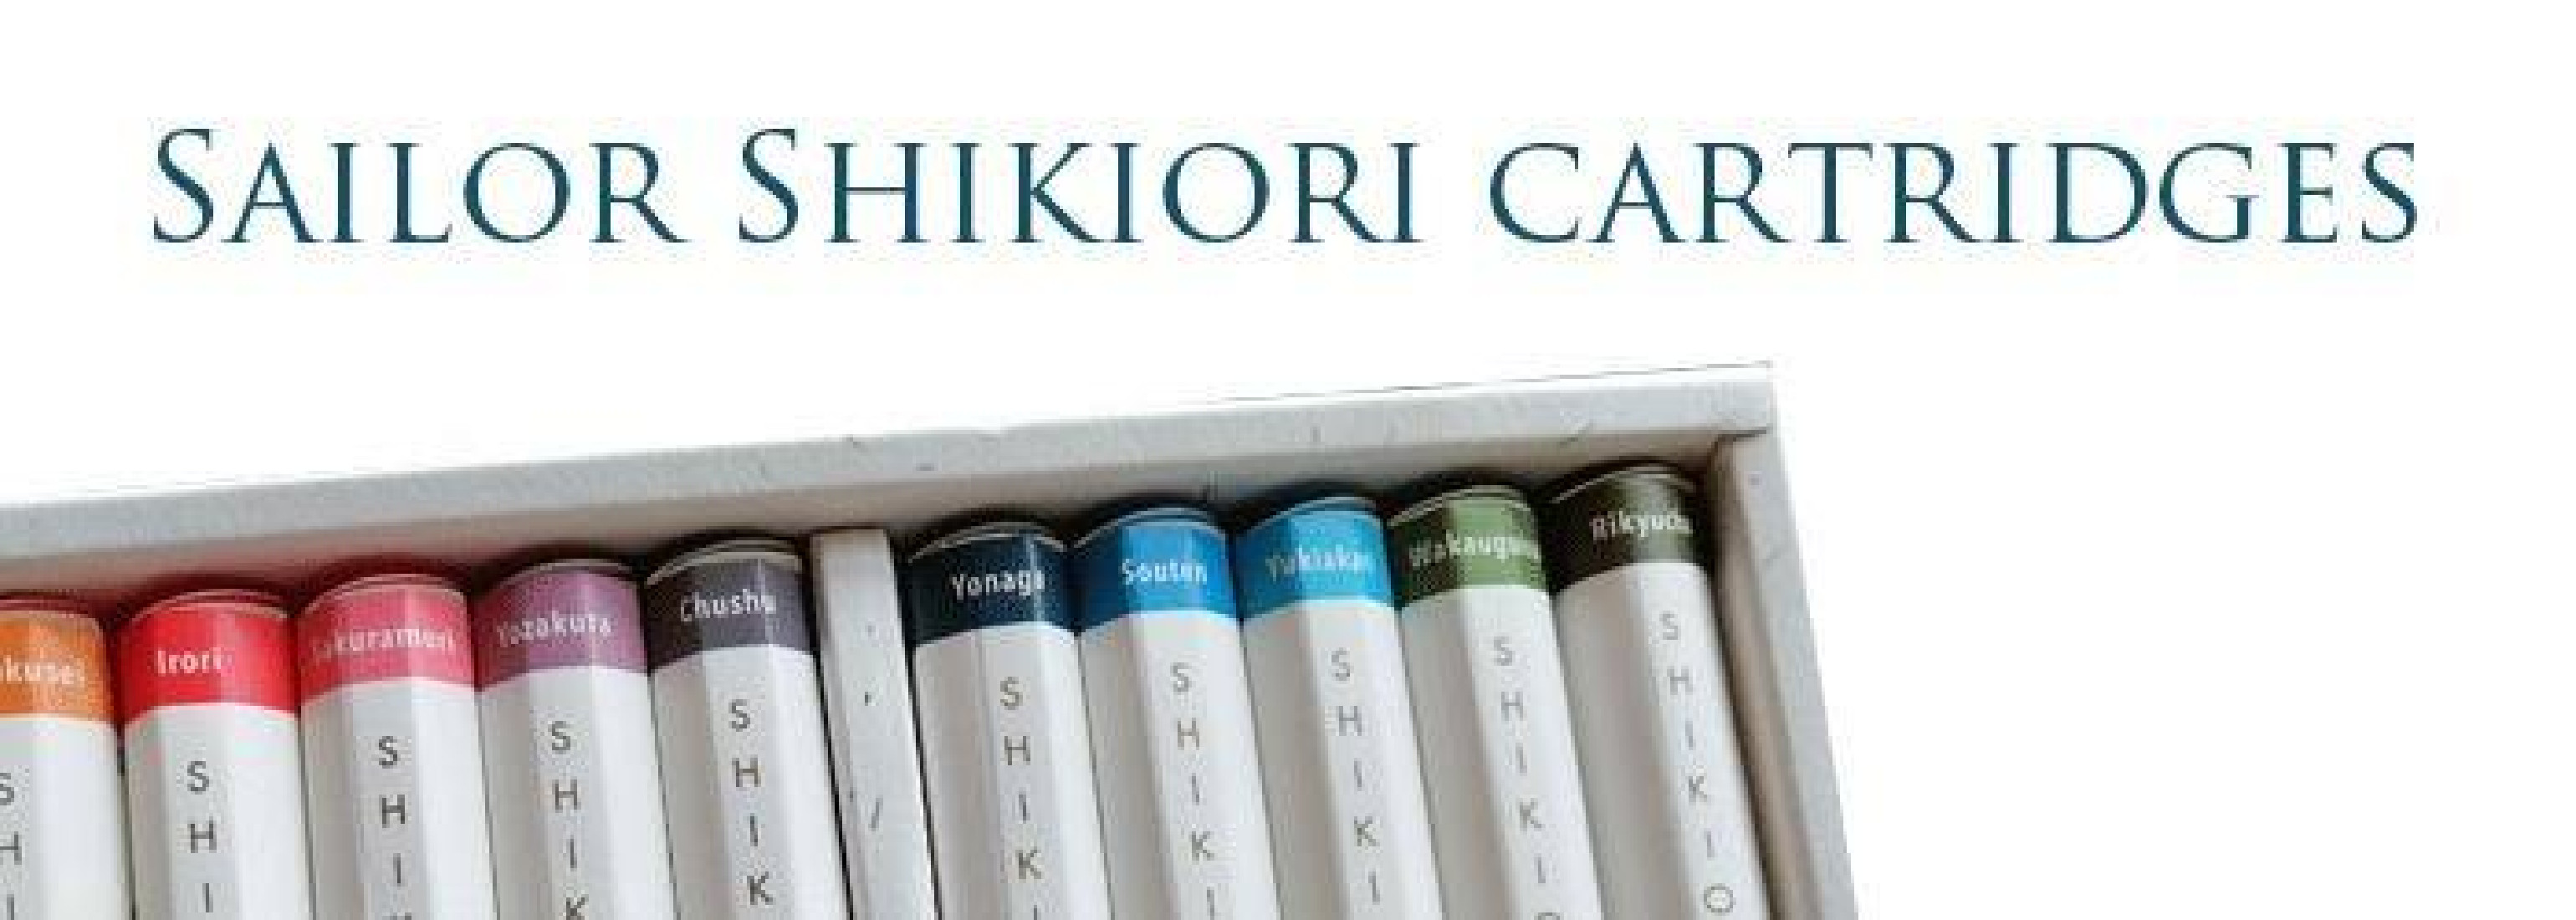 Sailor Shikiori ink cartidge four seasons (spring) 3pcs pack